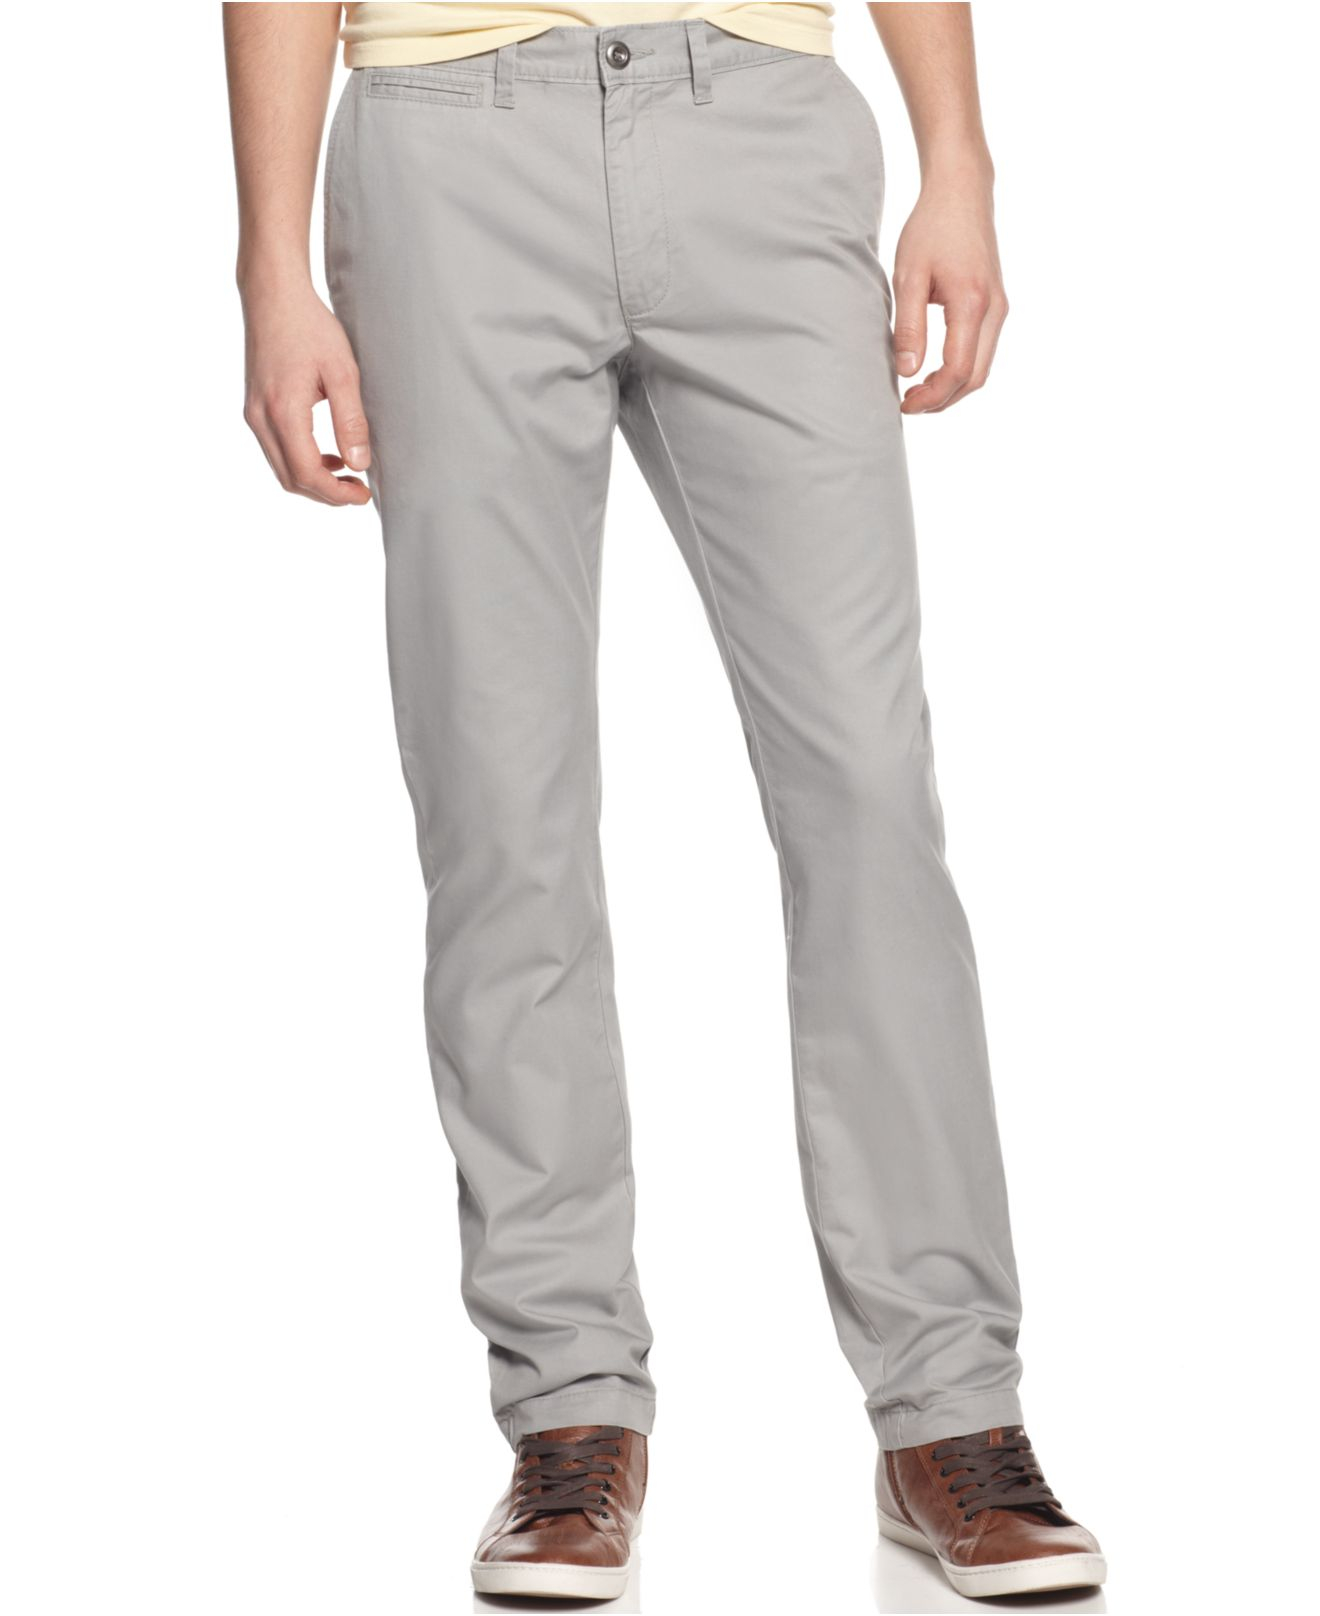 Lyst - American Rag Pants, Chino Pants in Gray for Men